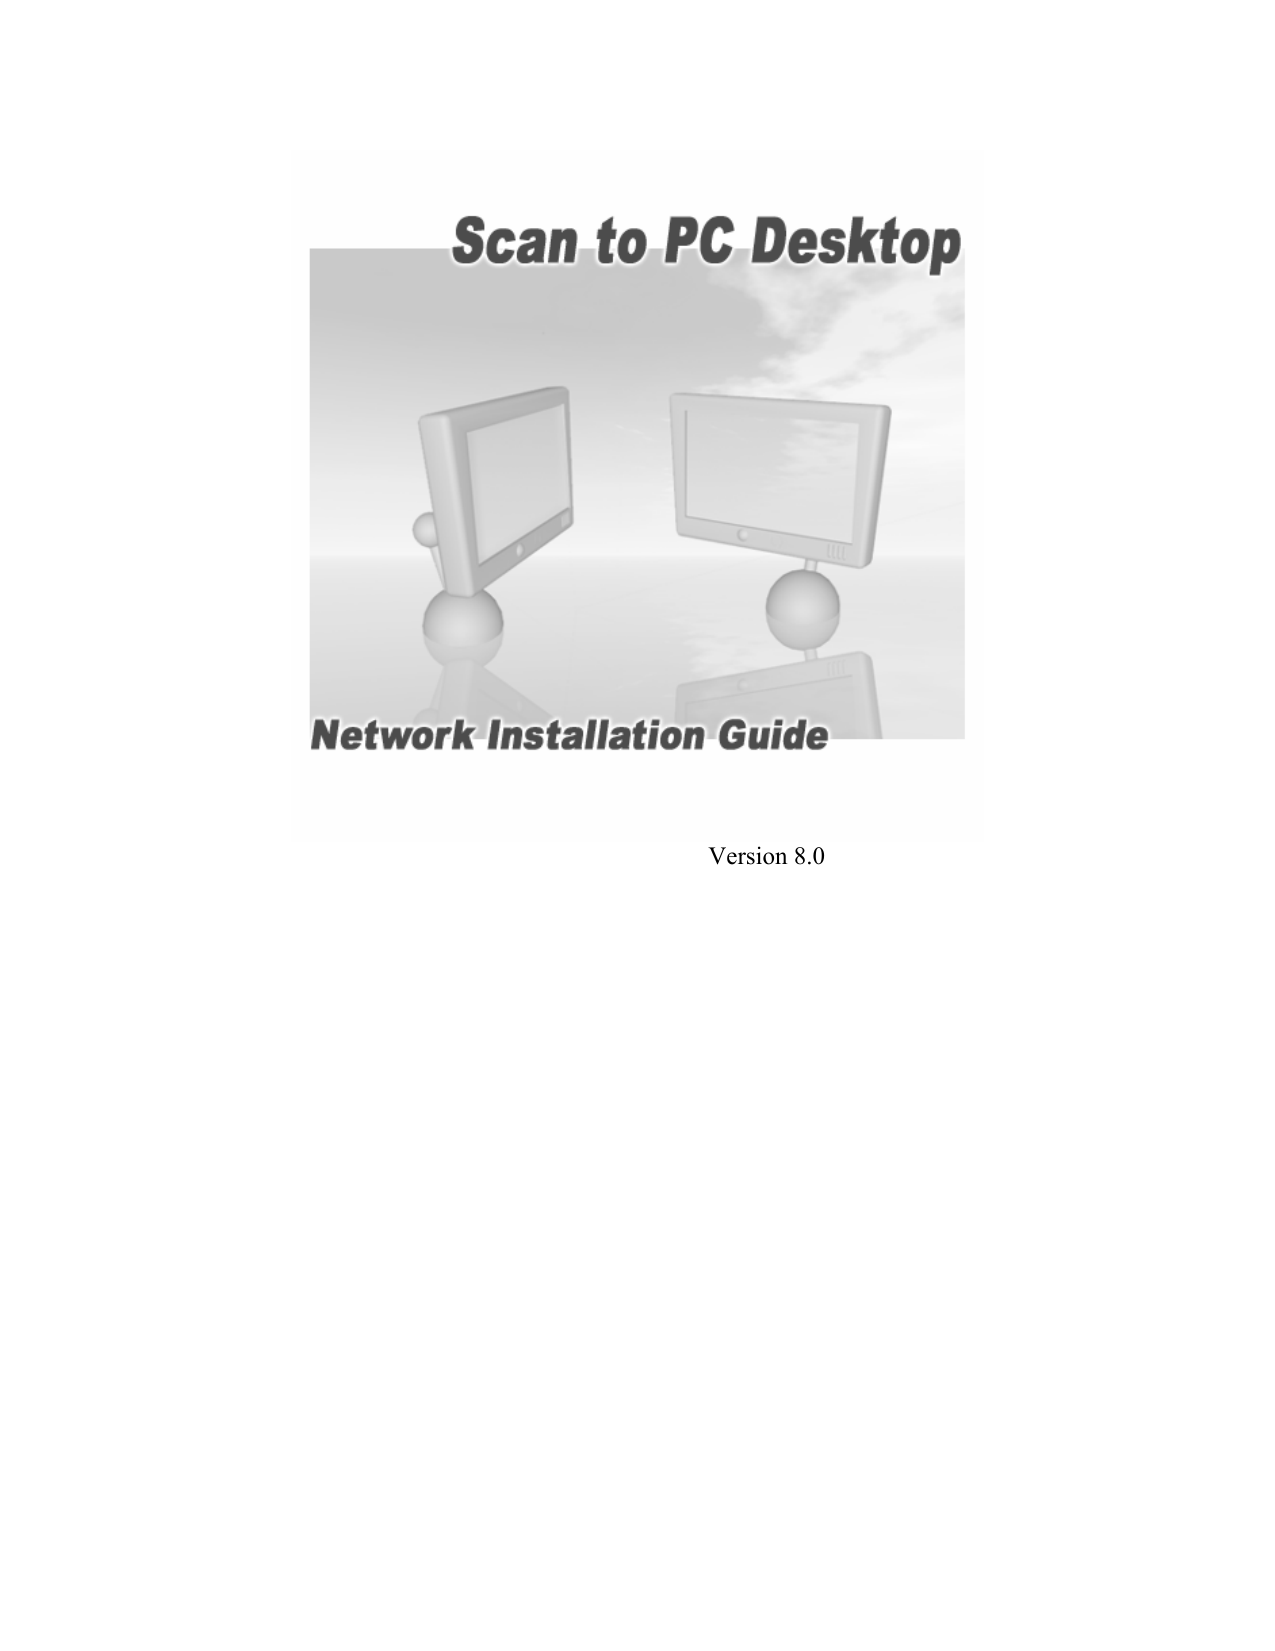 xerox scan to pc desktop professional